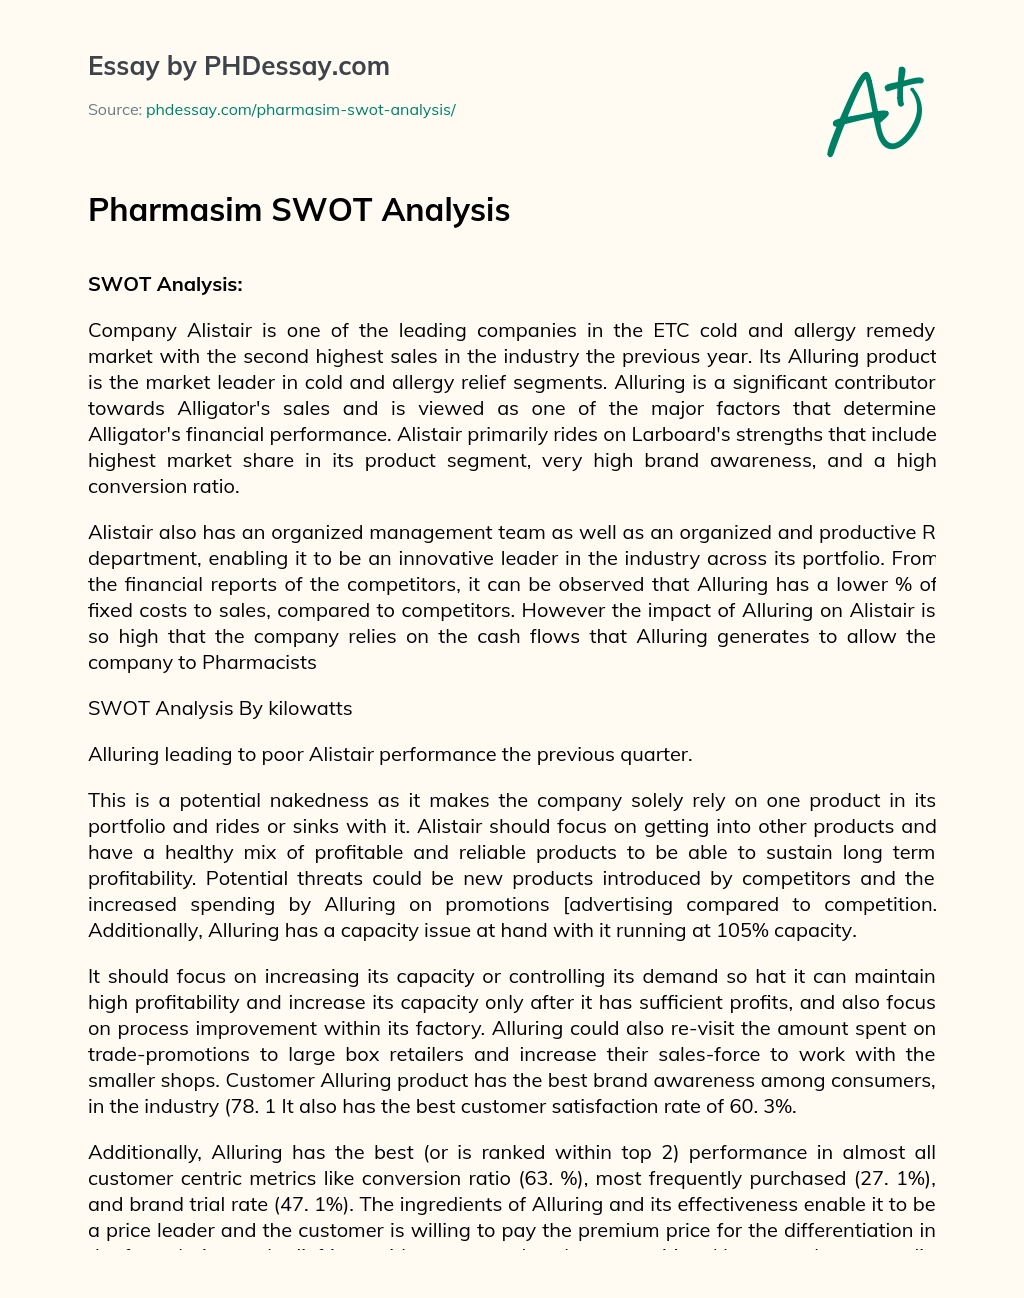 Pharmasim SWOT Analysis essay